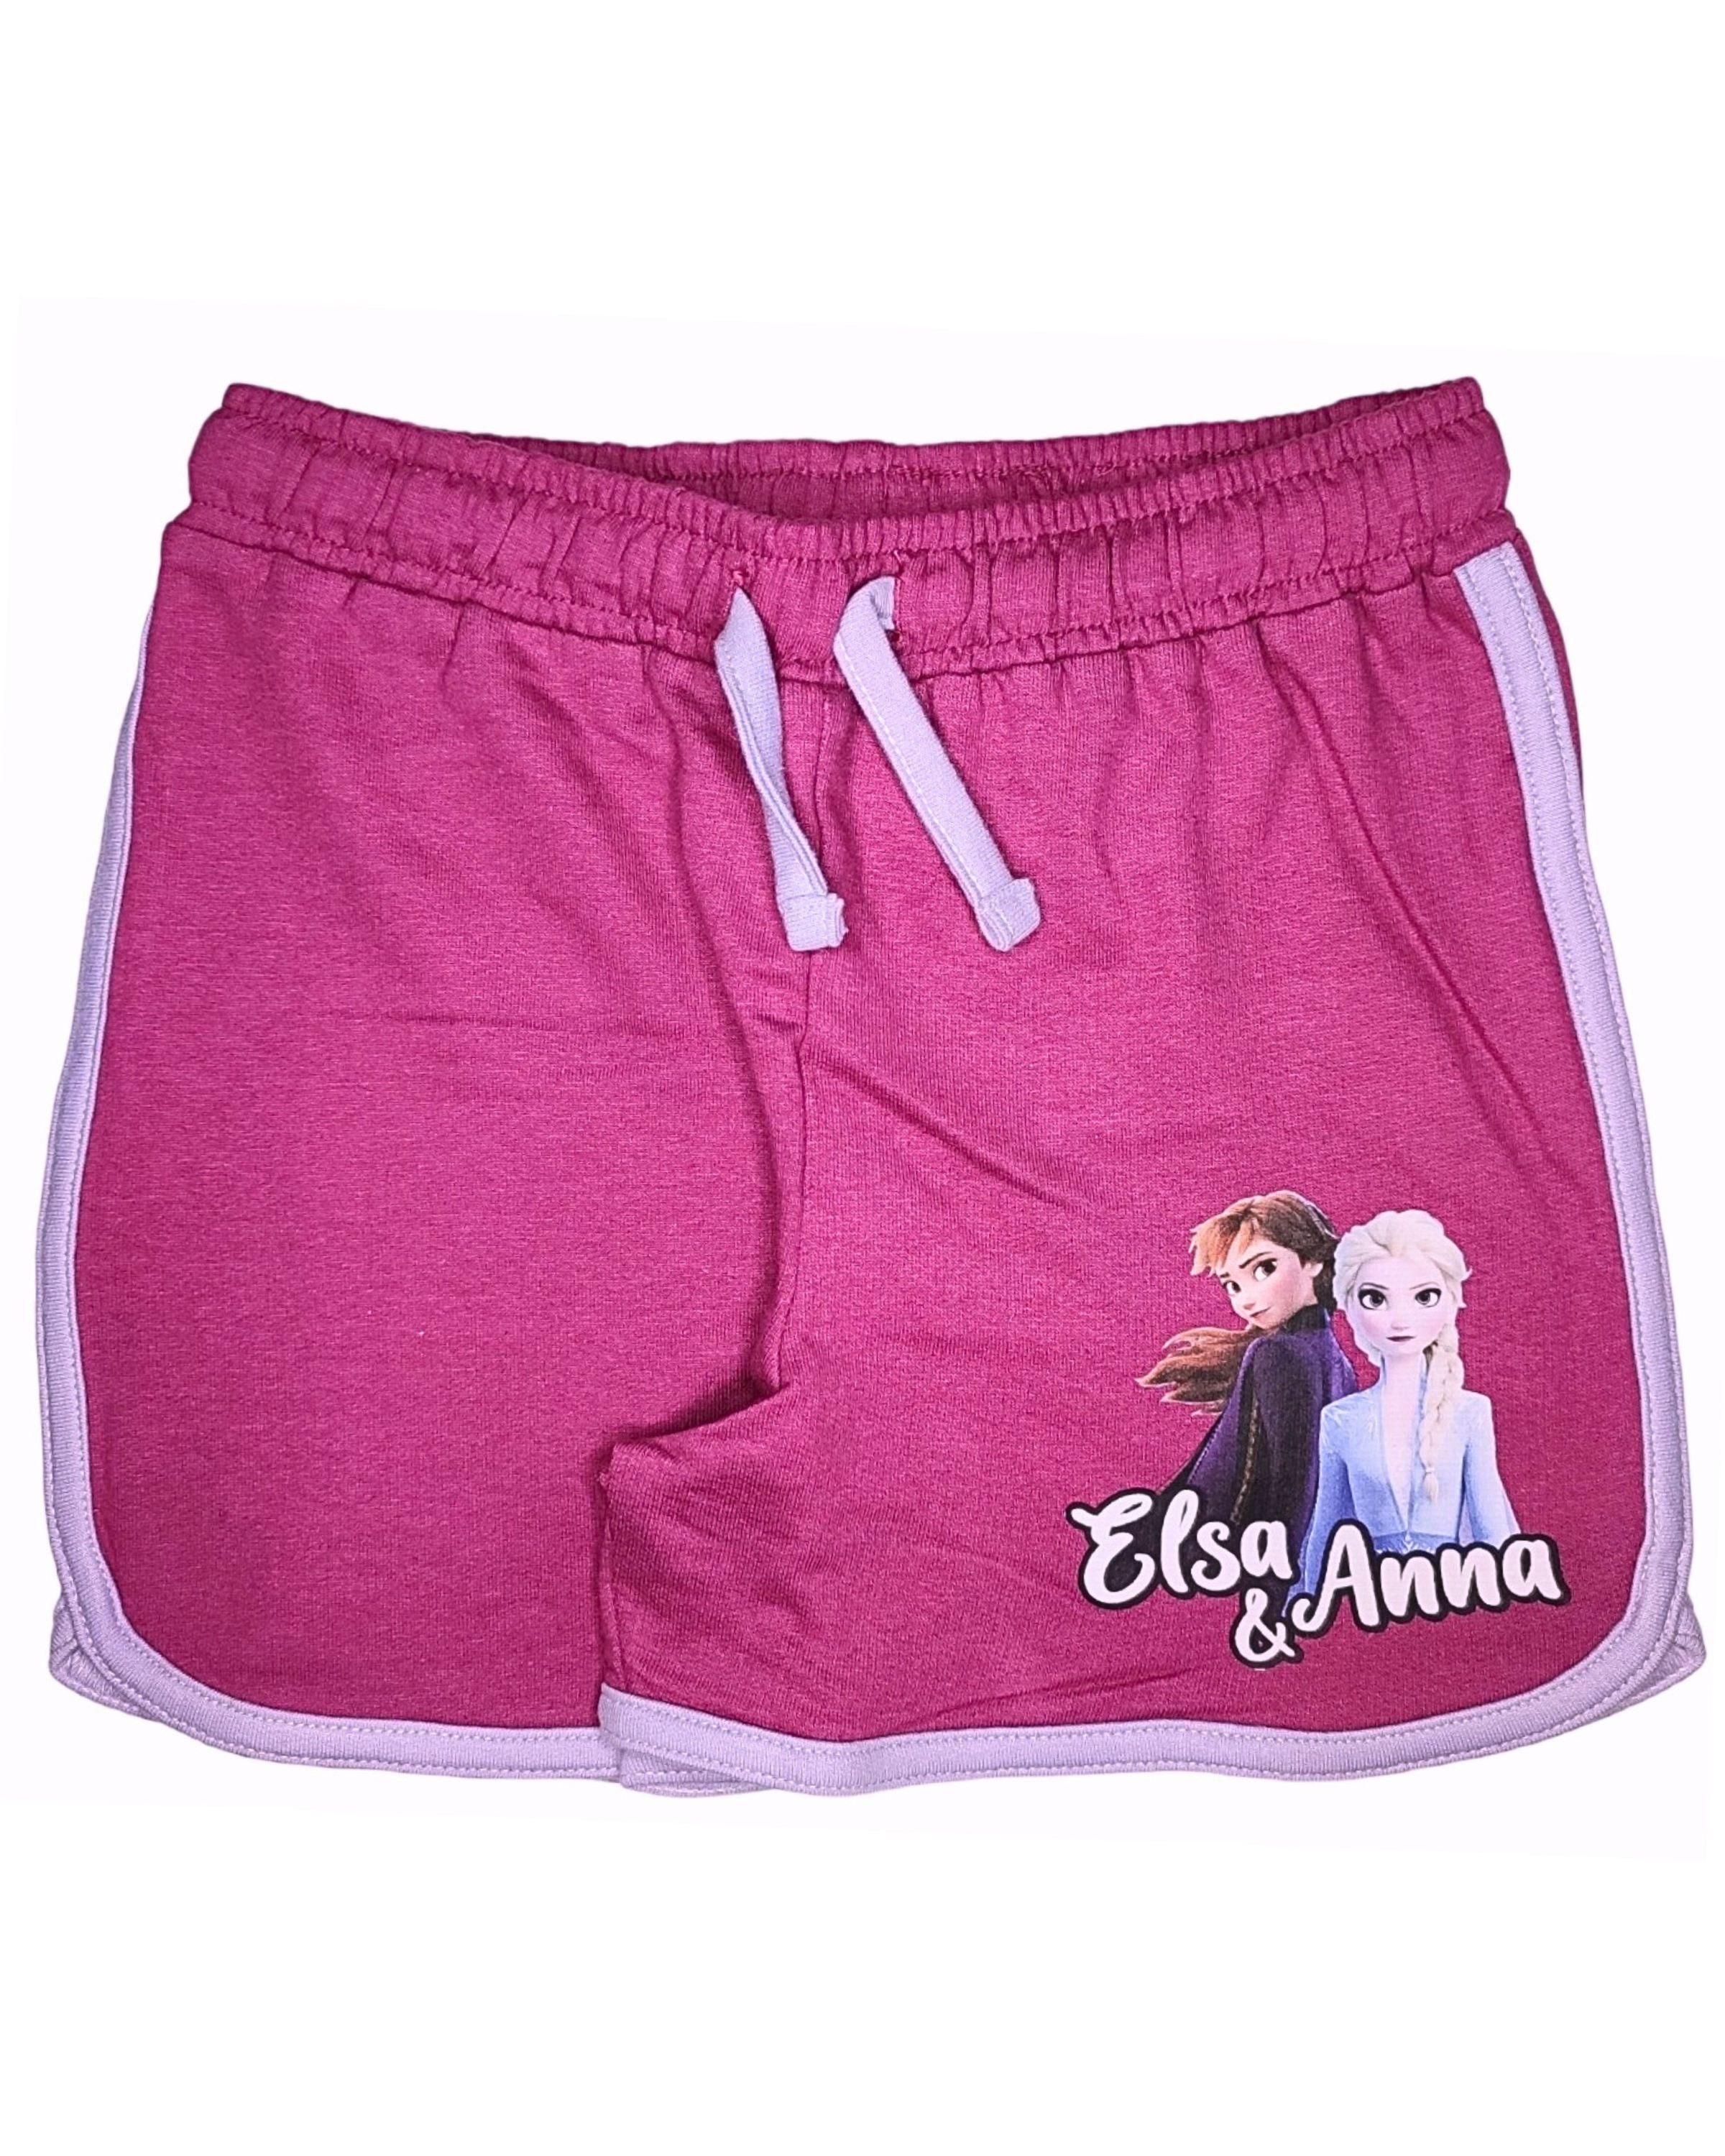 Disney Frozen Shorts Elsa & Anna Mädchen kurze Hose aus Baumwolle Gr. 98 - 128 cm Dunkellila